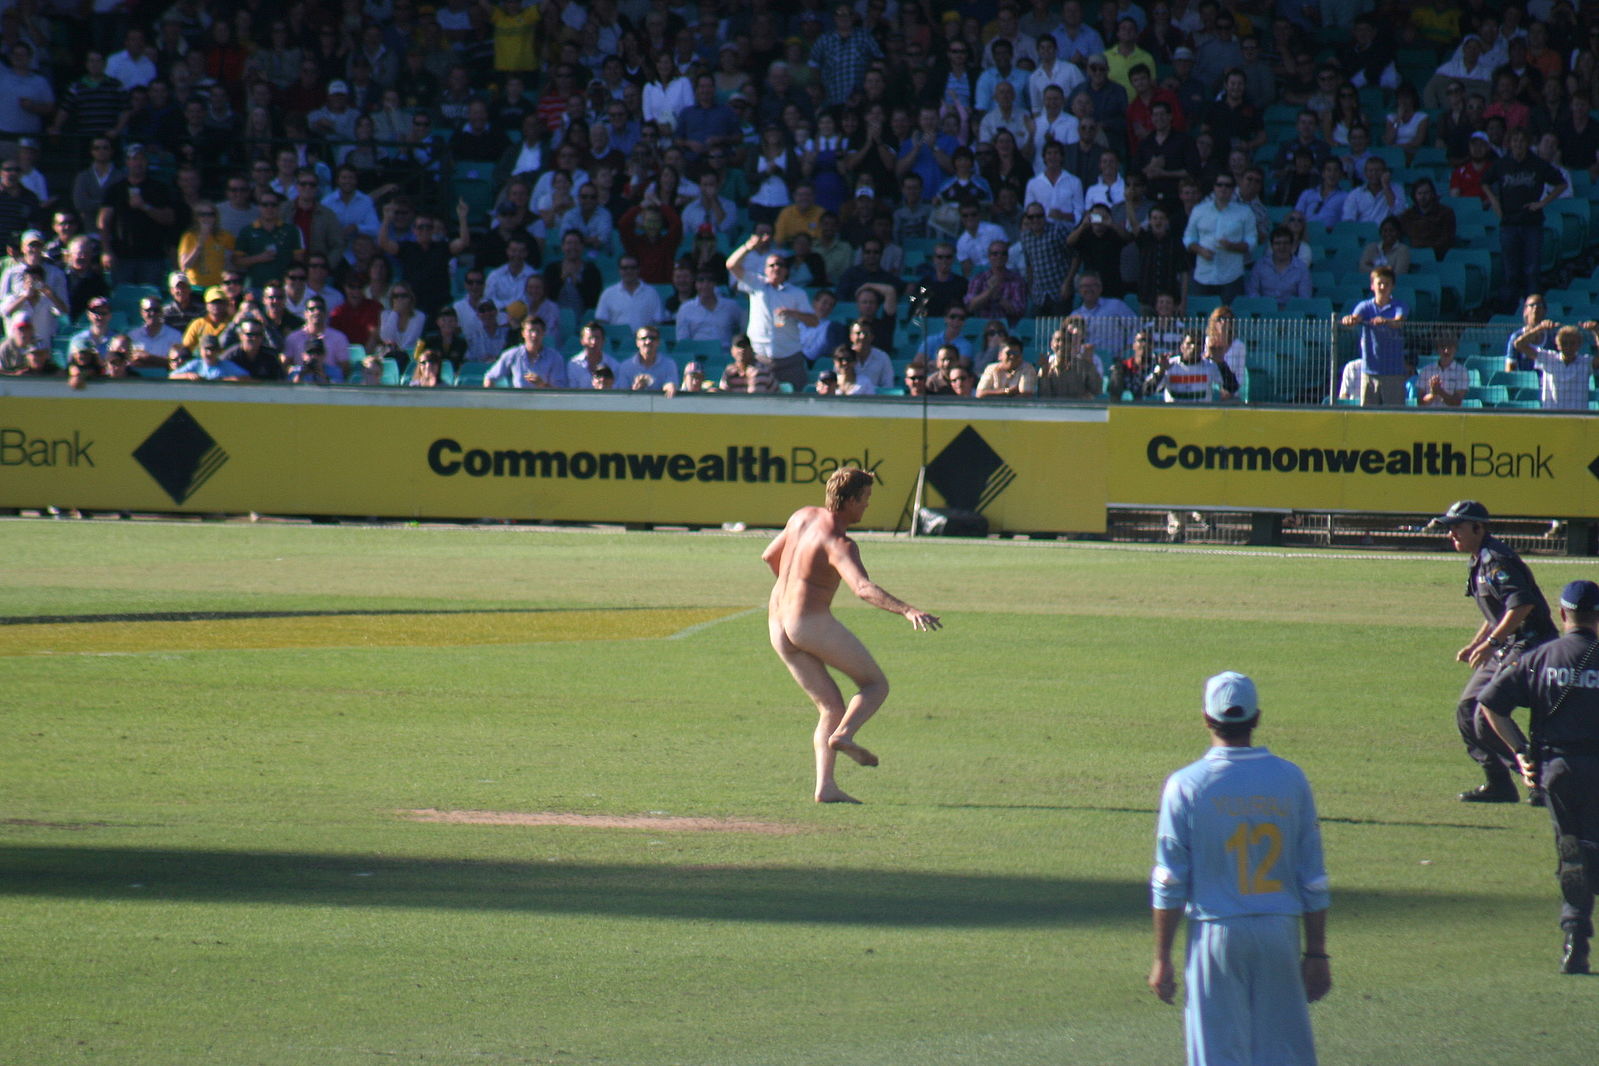 Streaker on a Cricket Ground